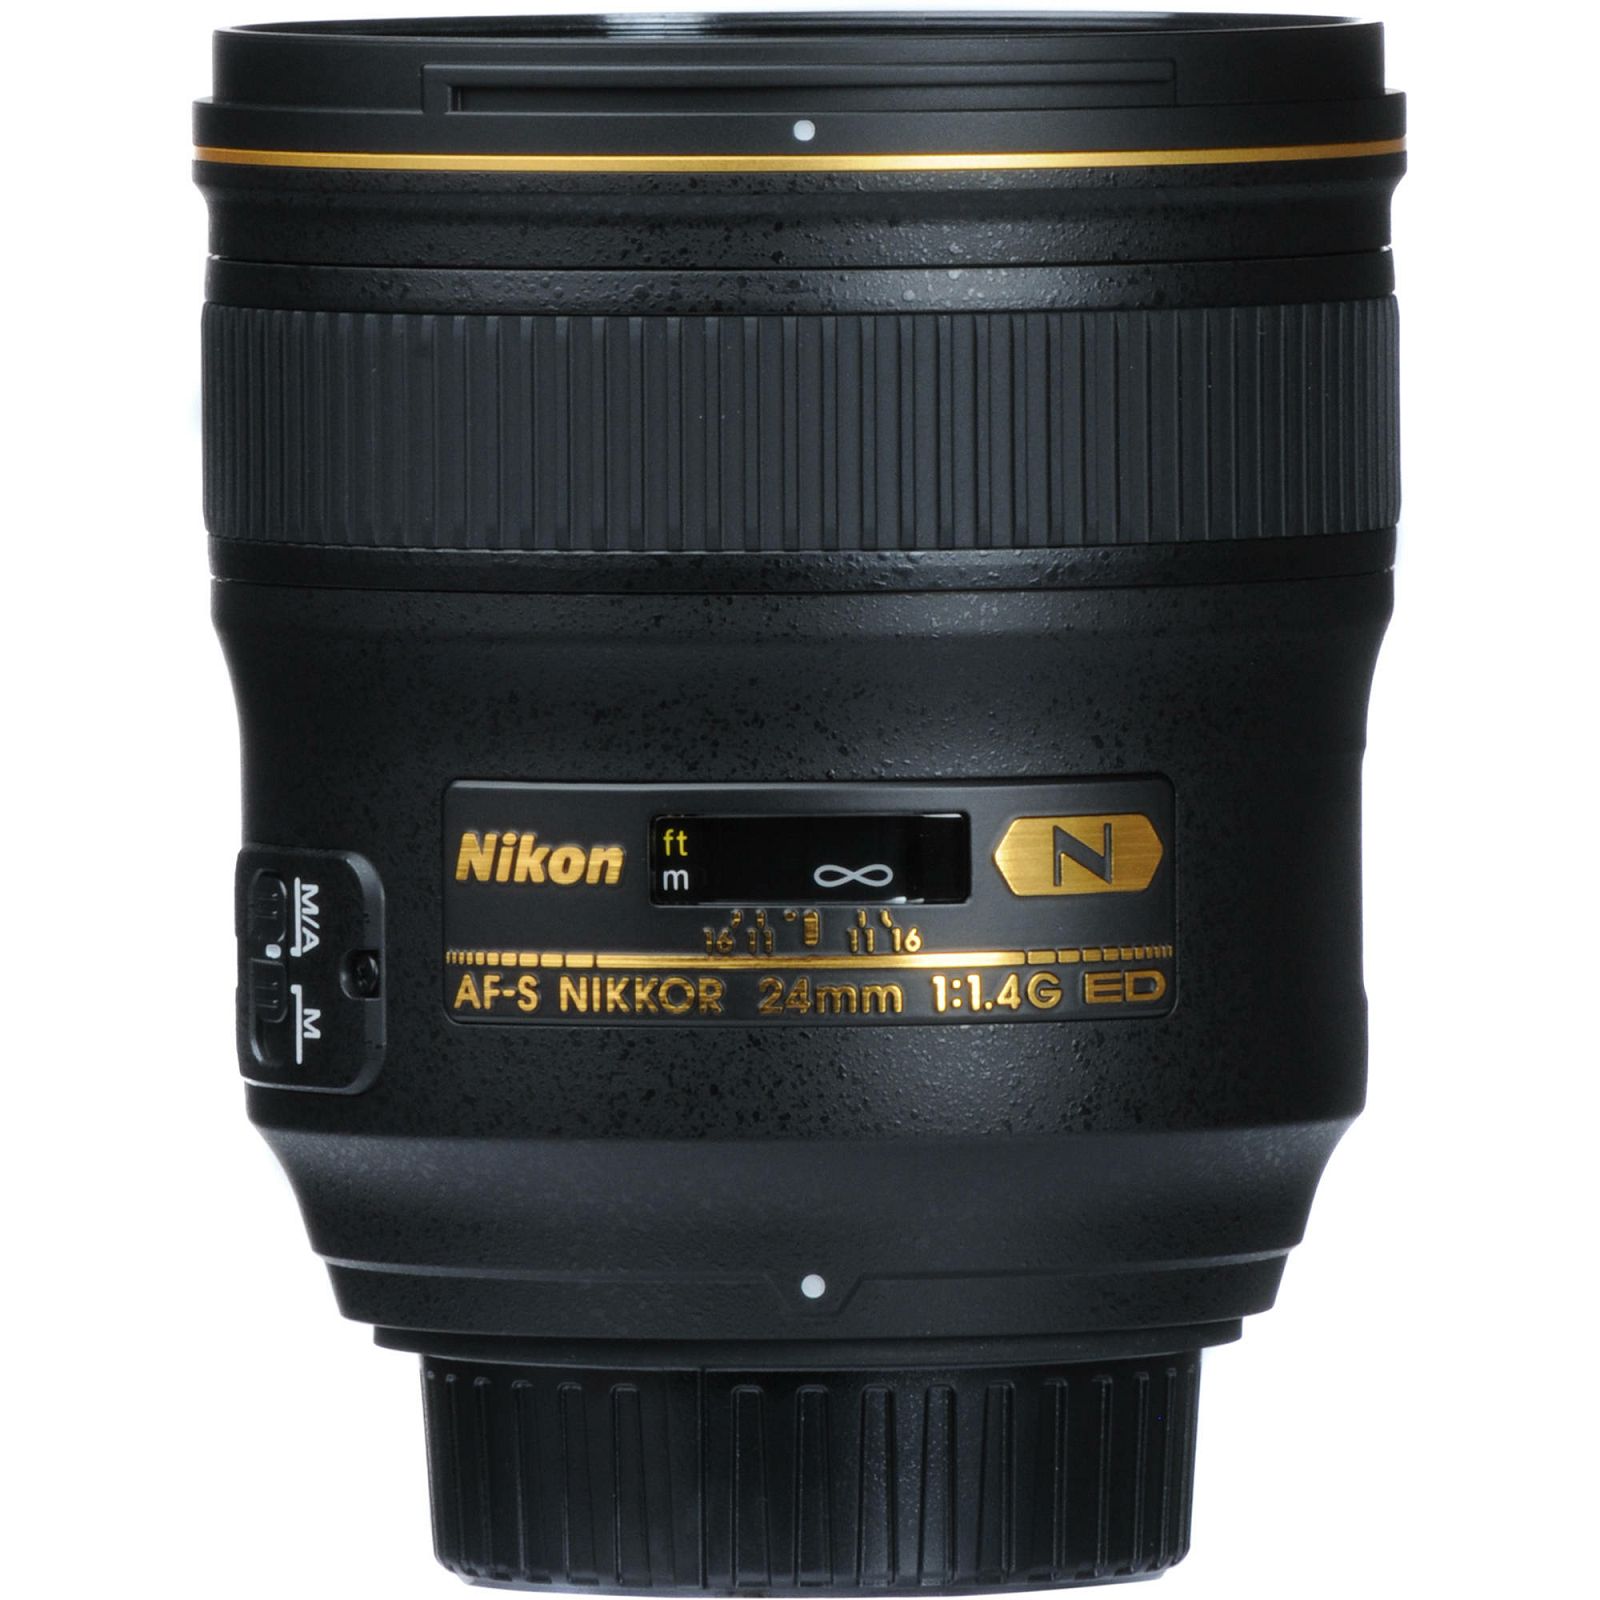 Nikon AF-S 24mm f/1.4G ED FX širokokutni objektiv fiksne žarišne duljine Nikkor 24 1.4 G Professional auto focus wide angle prime lens (JAA131DA)